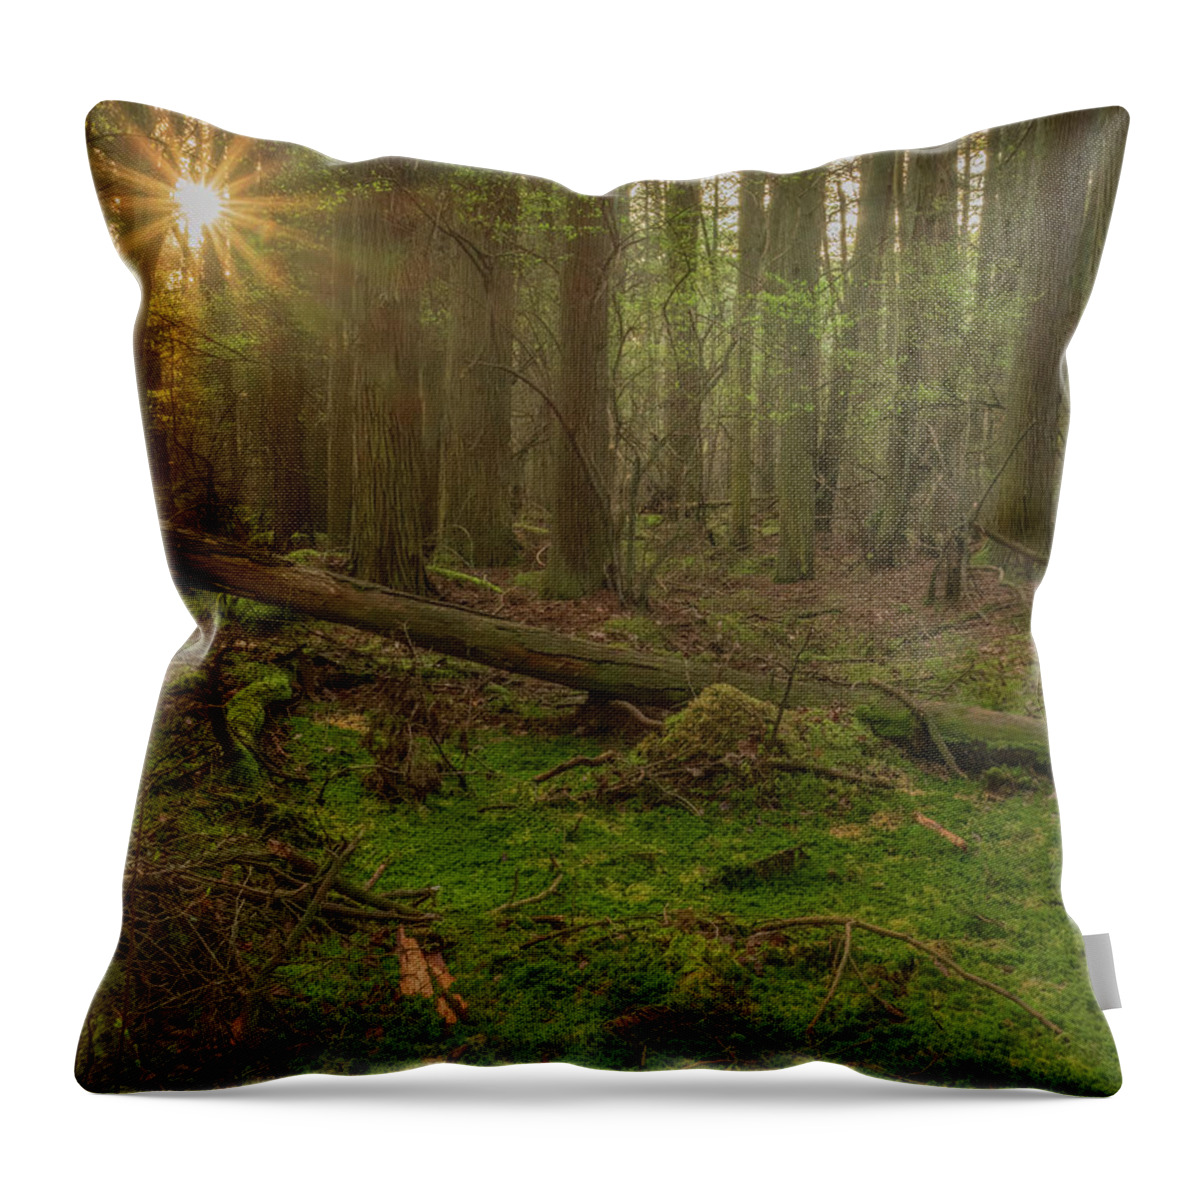 New Jersey Throw Pillow featuring the photograph Sunburst Through The Cedars by Kristia Adams